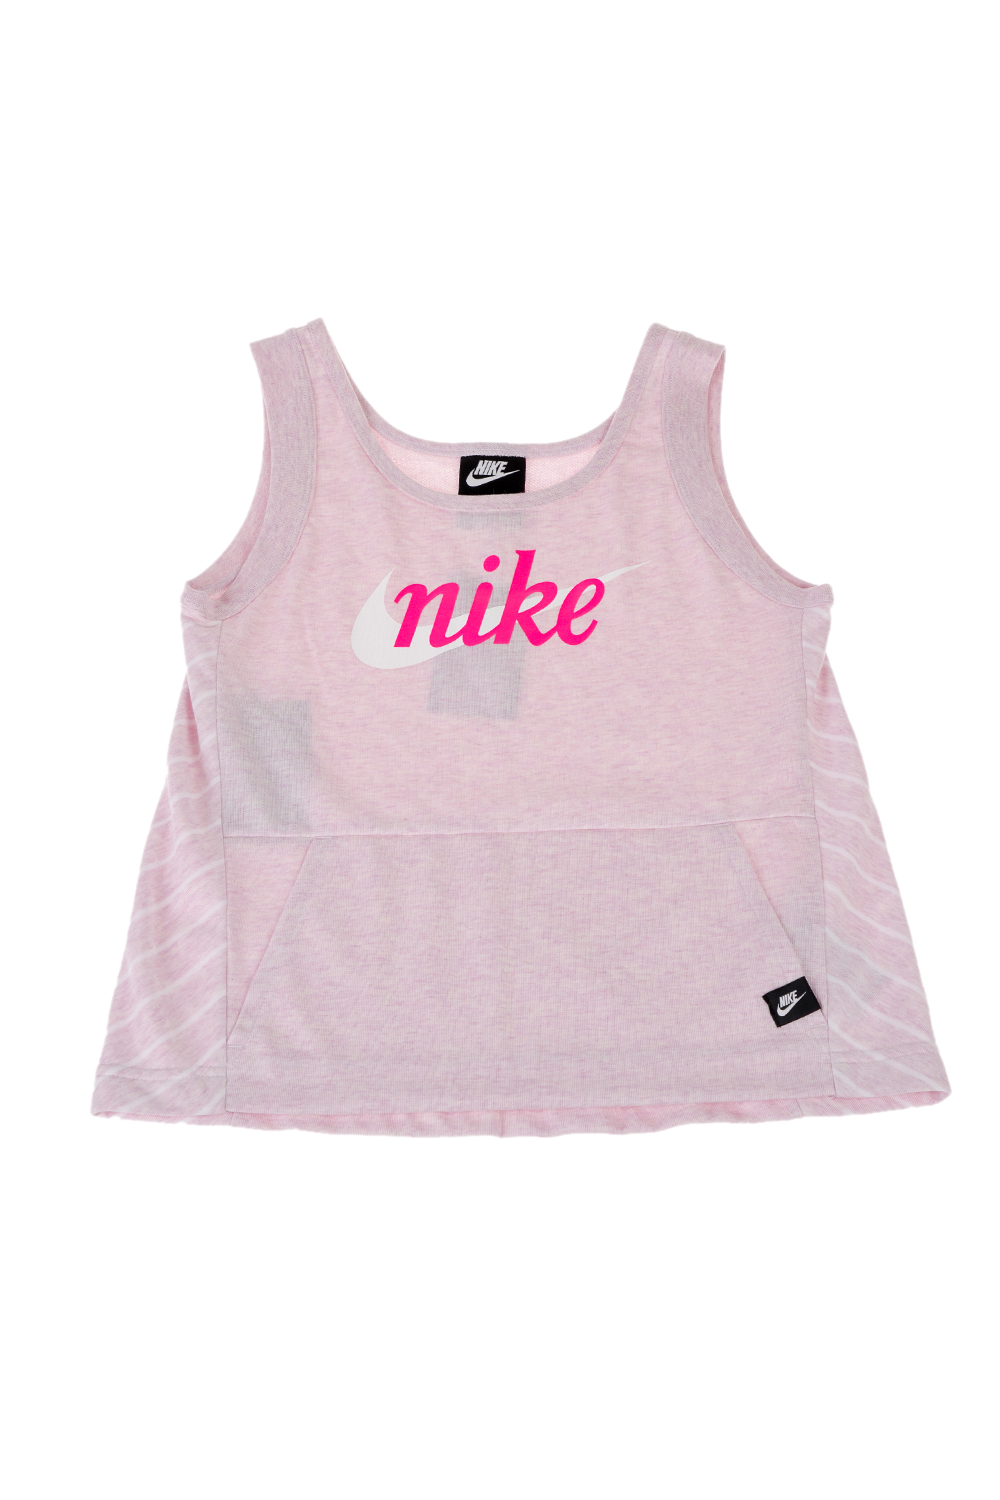 NIKE - Παιδικό φανελάκι Nike Sportswear Fleece ροζ Παιδικά/Girls/Ρούχα/Αθλητικά